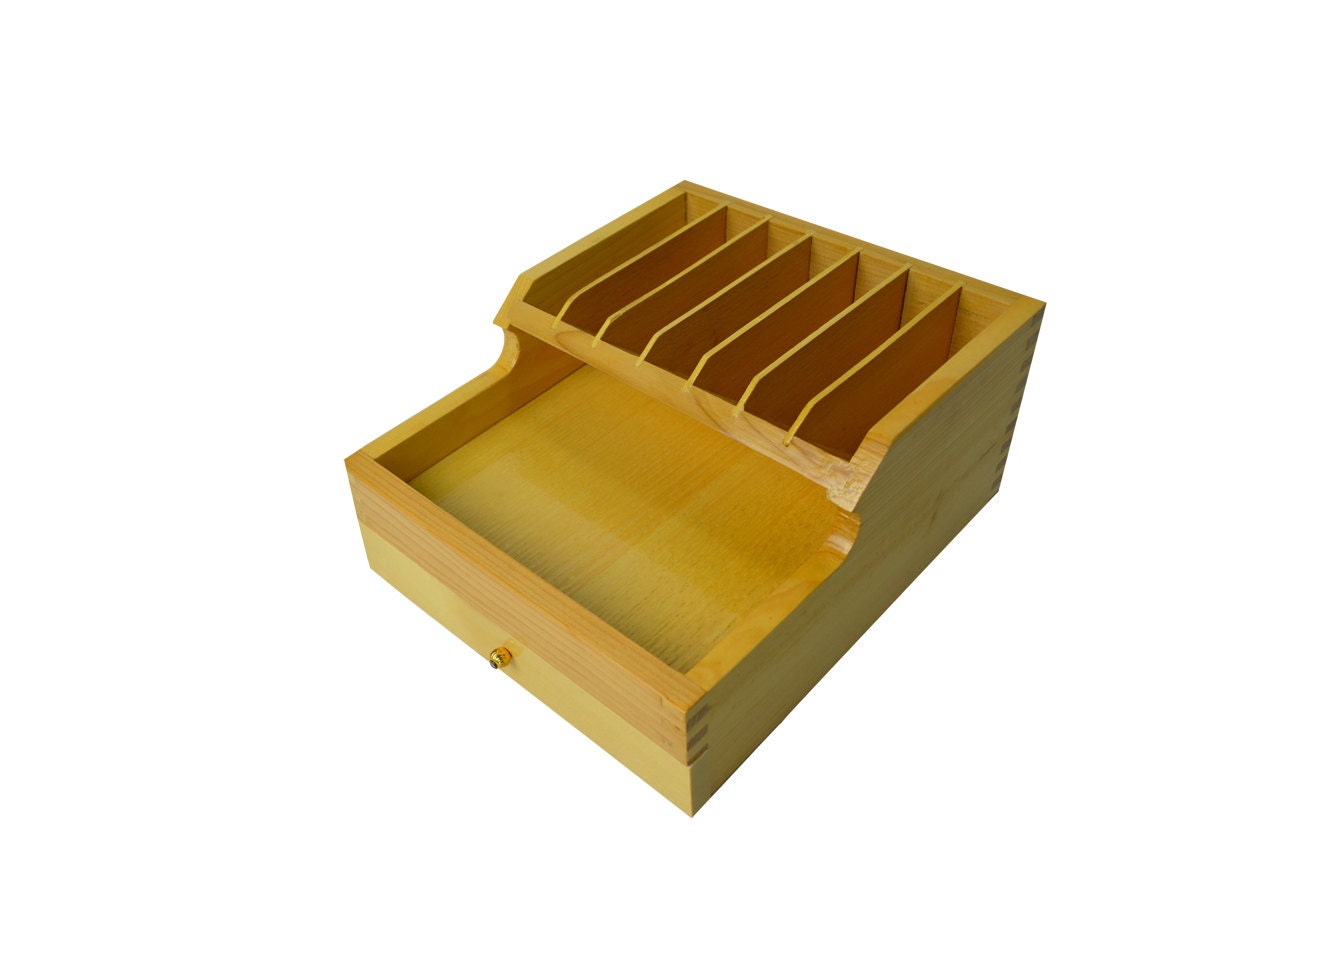 4-1/2 X 4-1/2 X 3 Wooden Bur Stand Organizer Storage Box W/ 72 Holes Jewelry  Making Tool Holder STRG-0068 